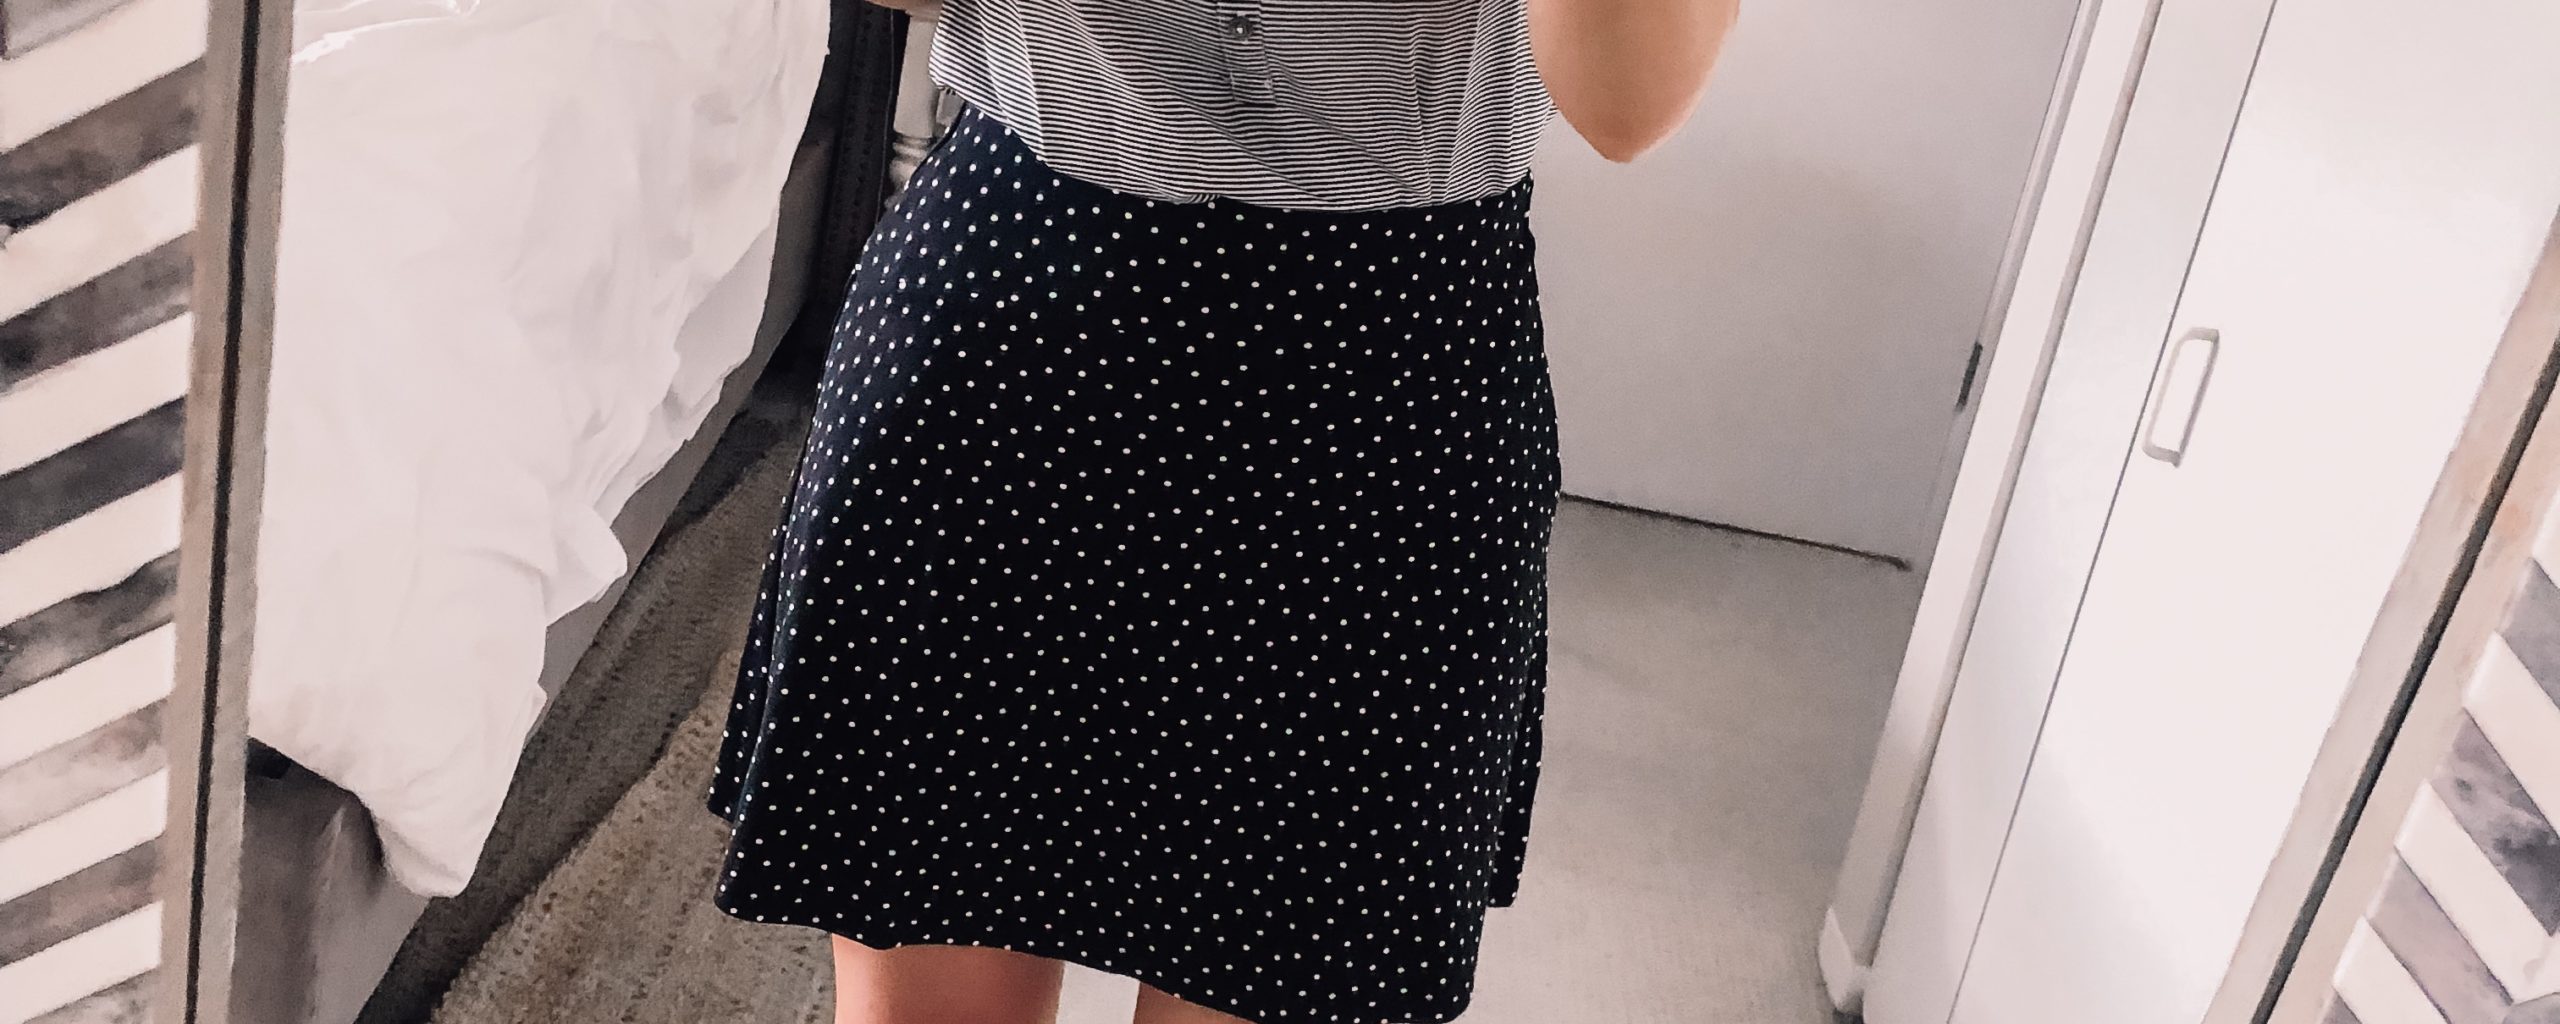 polka dot print skirt and striped tank top